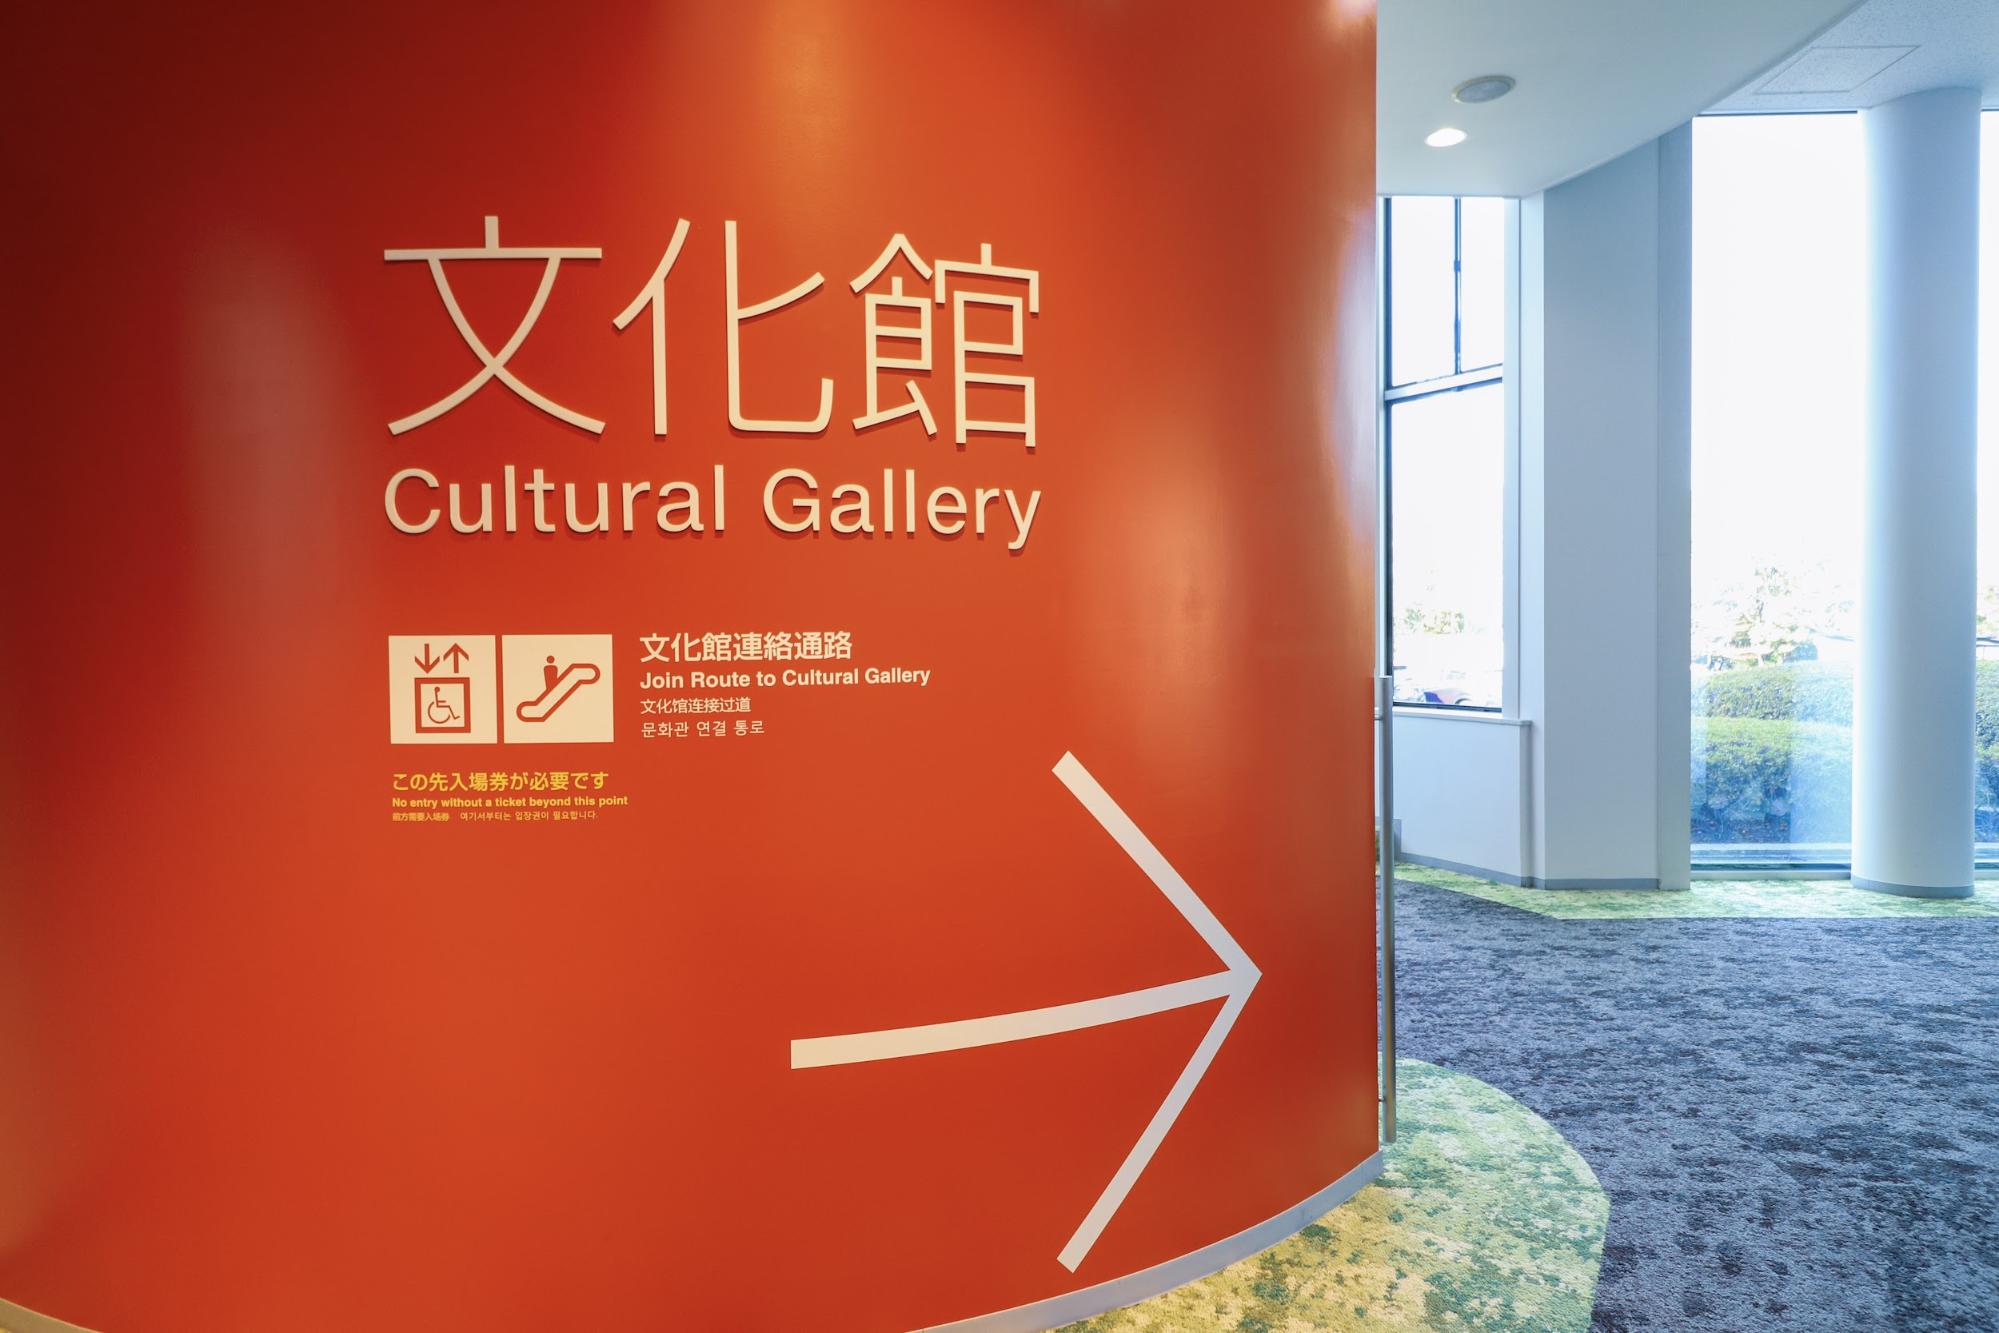 Cultural Gallery